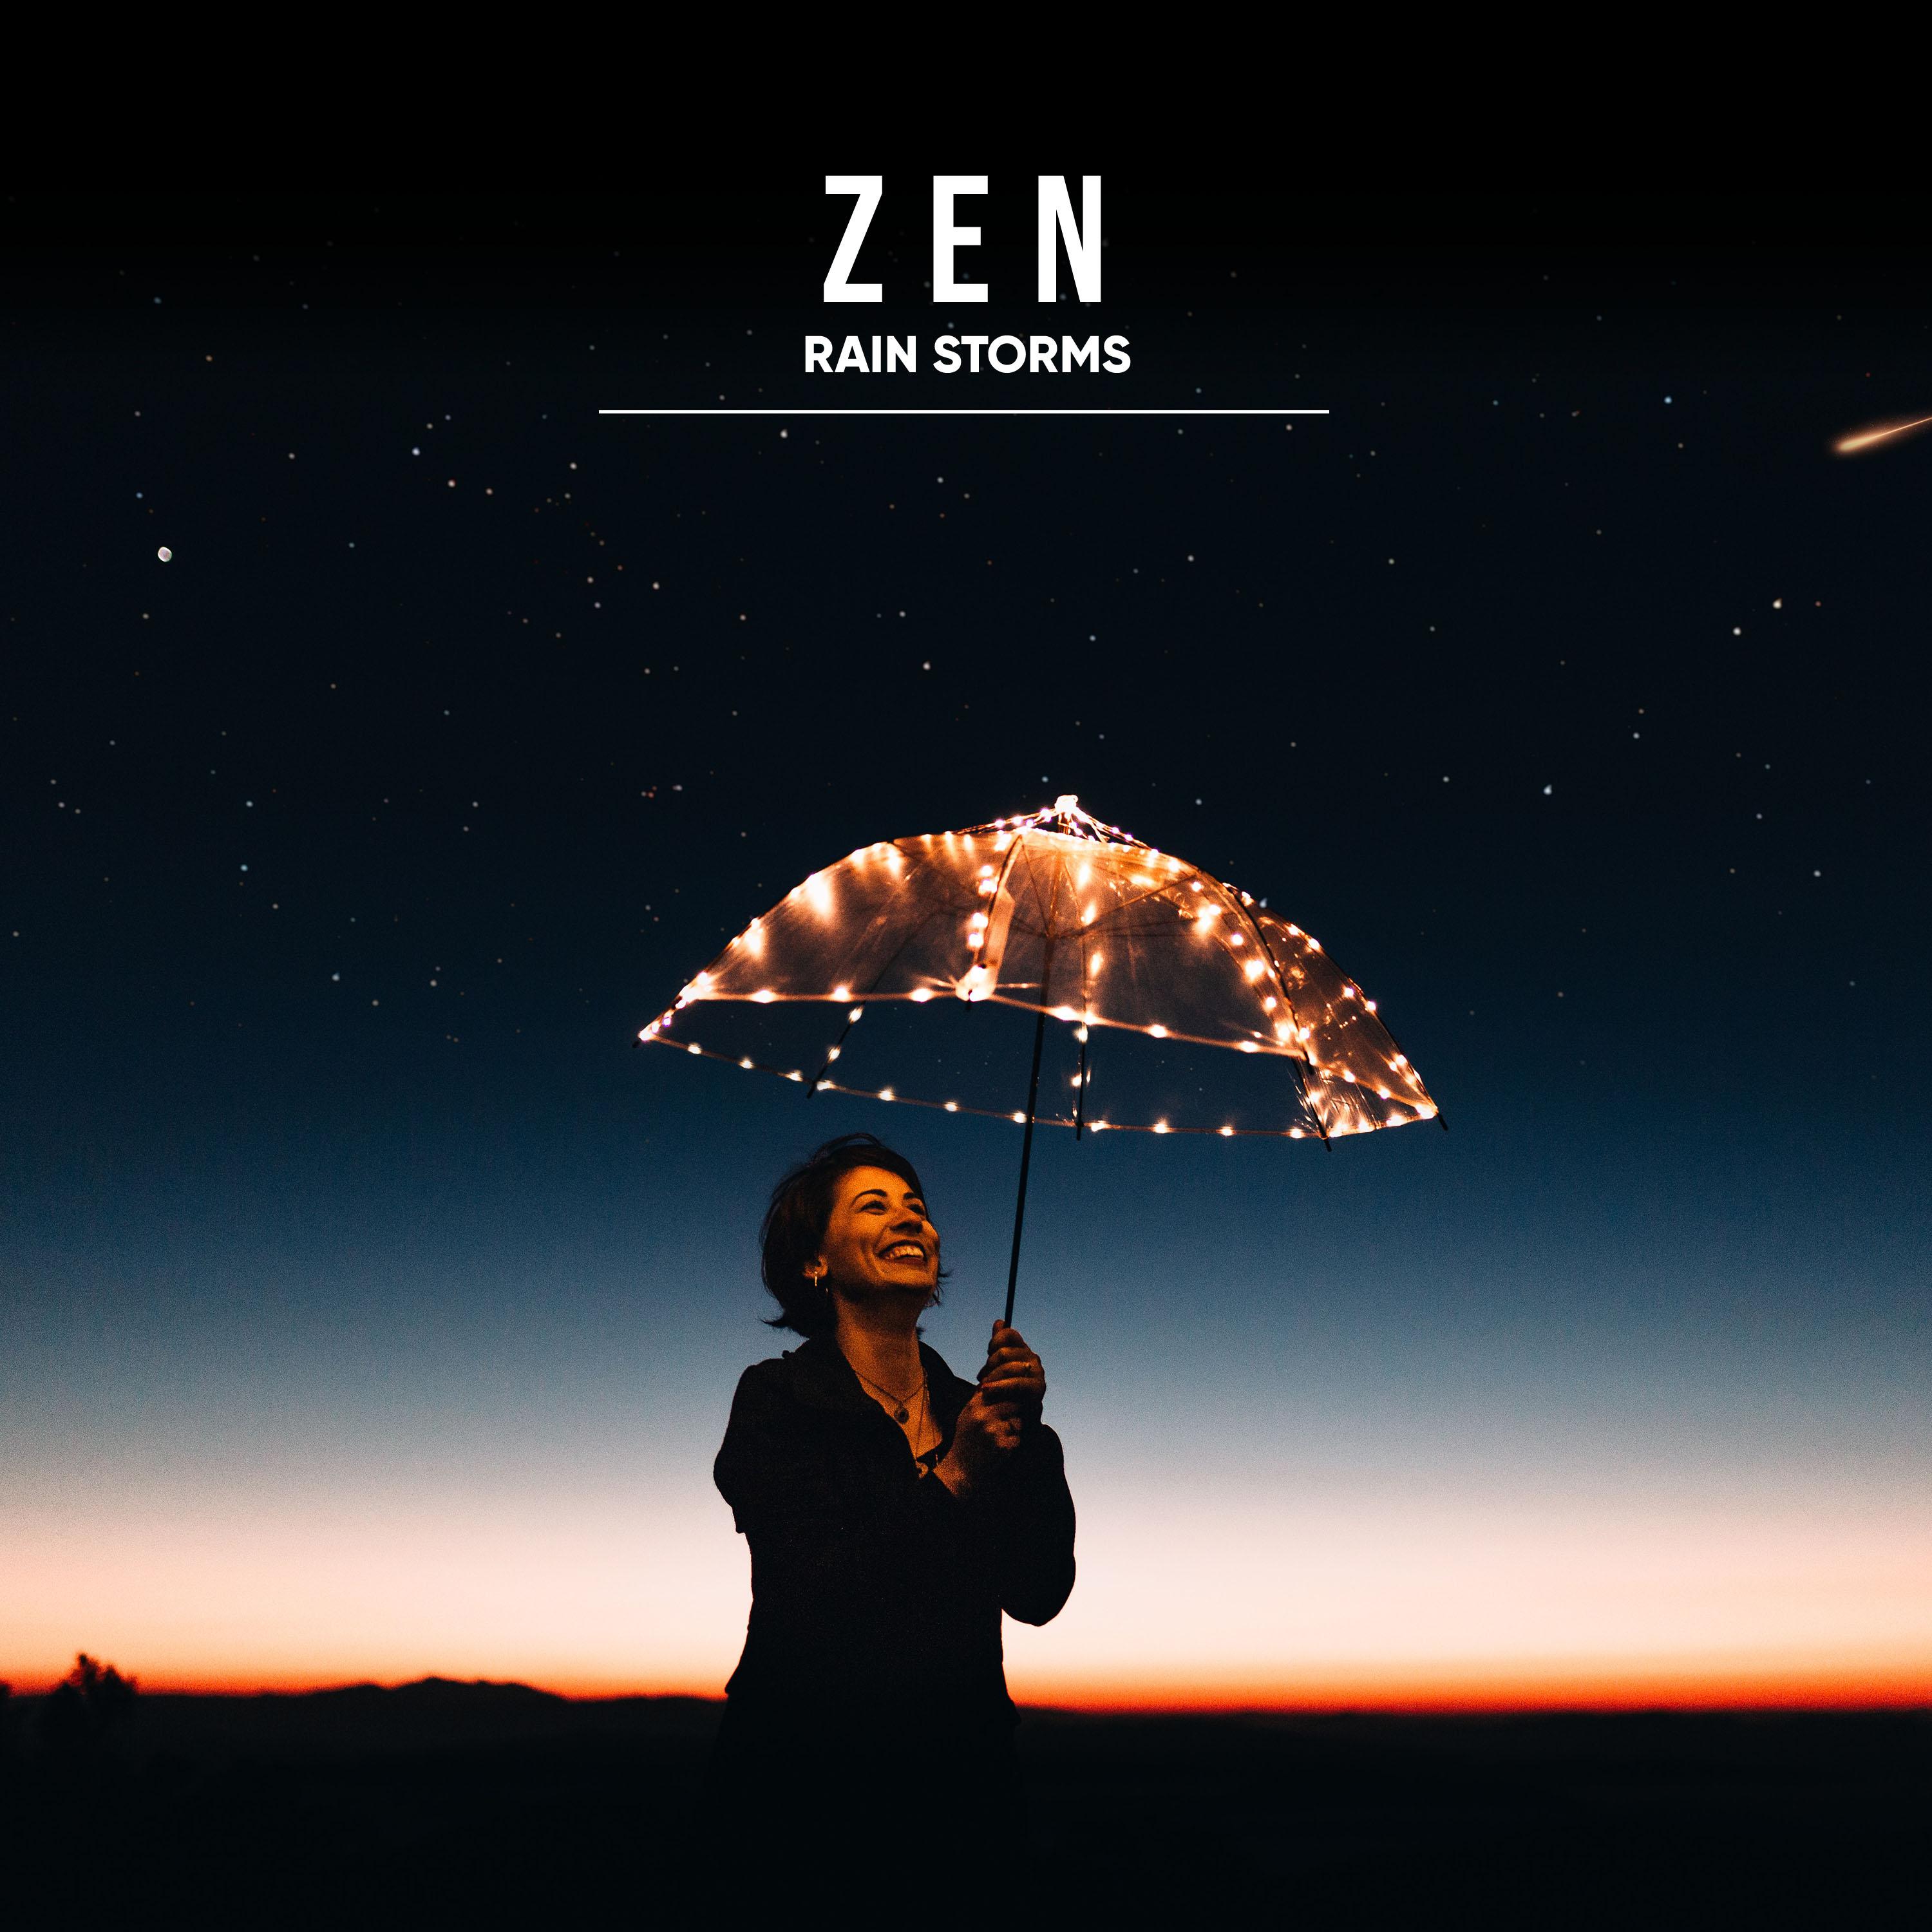 19 Zen Rain Storms to Sleep Easy